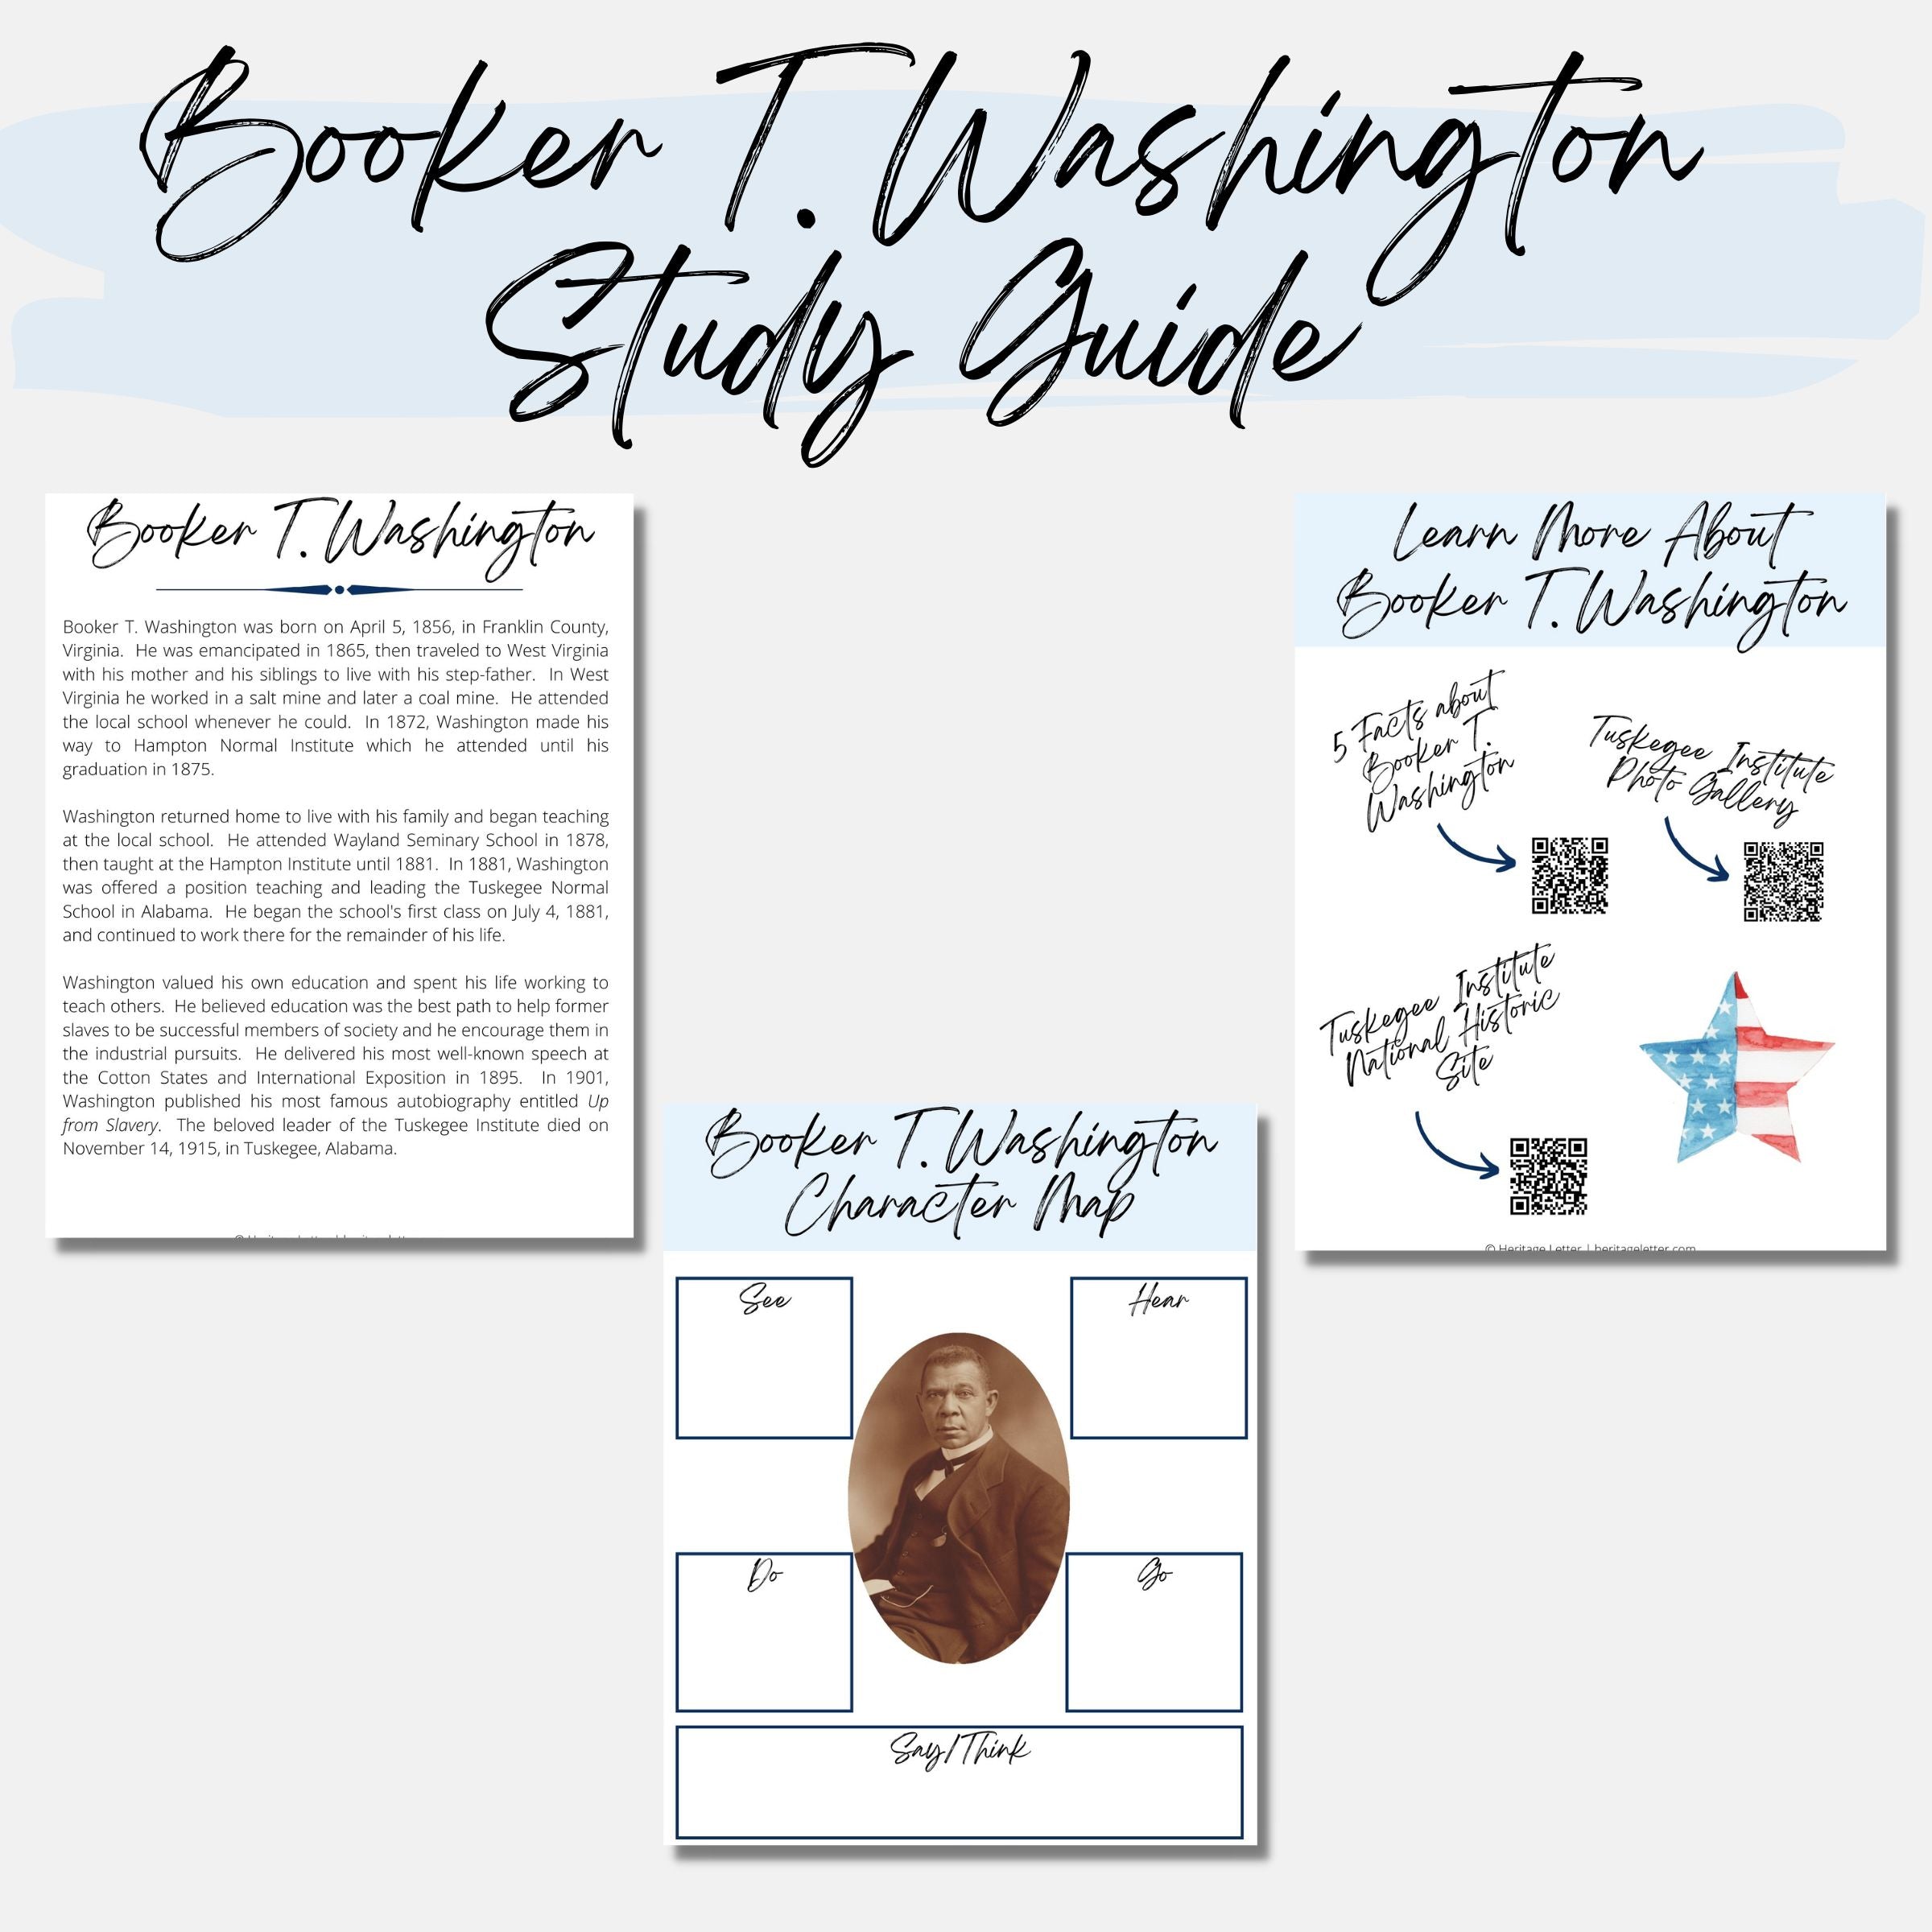 Booker T. Washington Study Guide